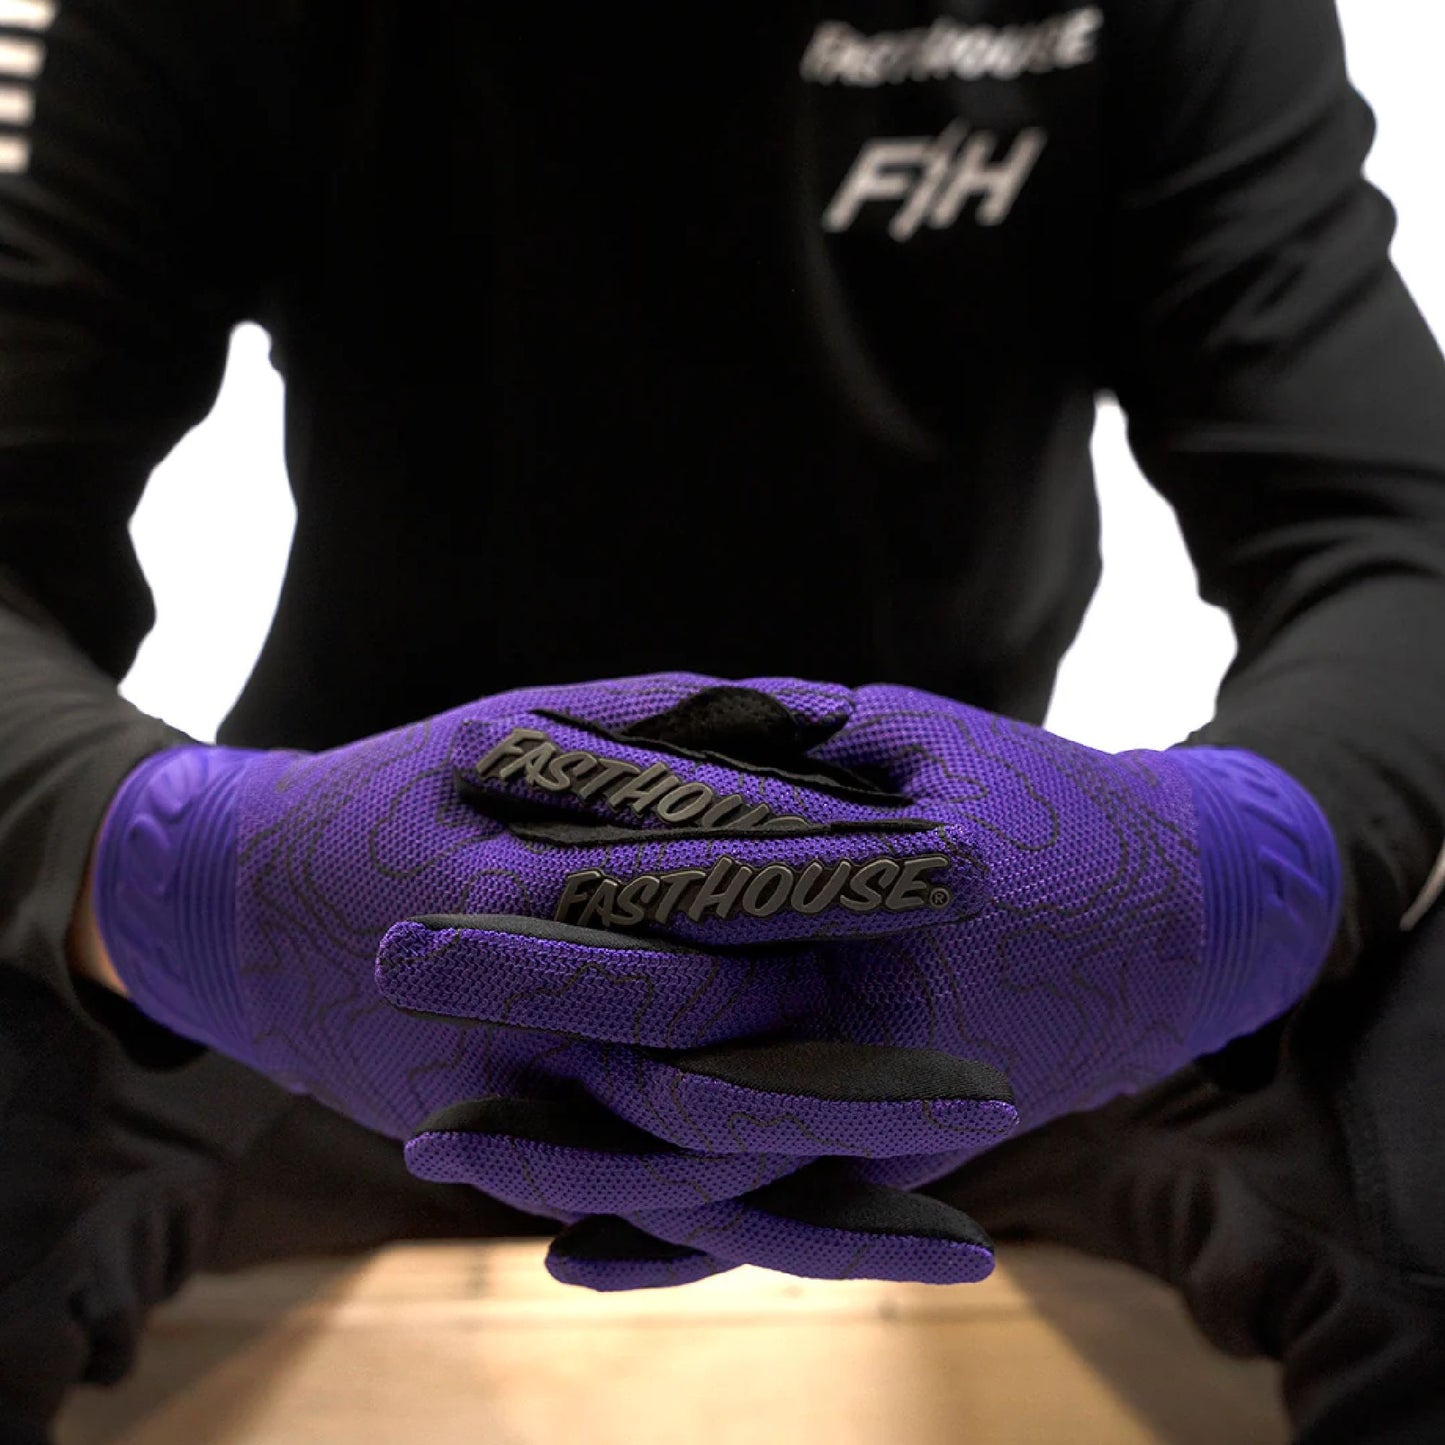 Fasthouse Youth Blitz Swift Glove Purple Bike Gloves